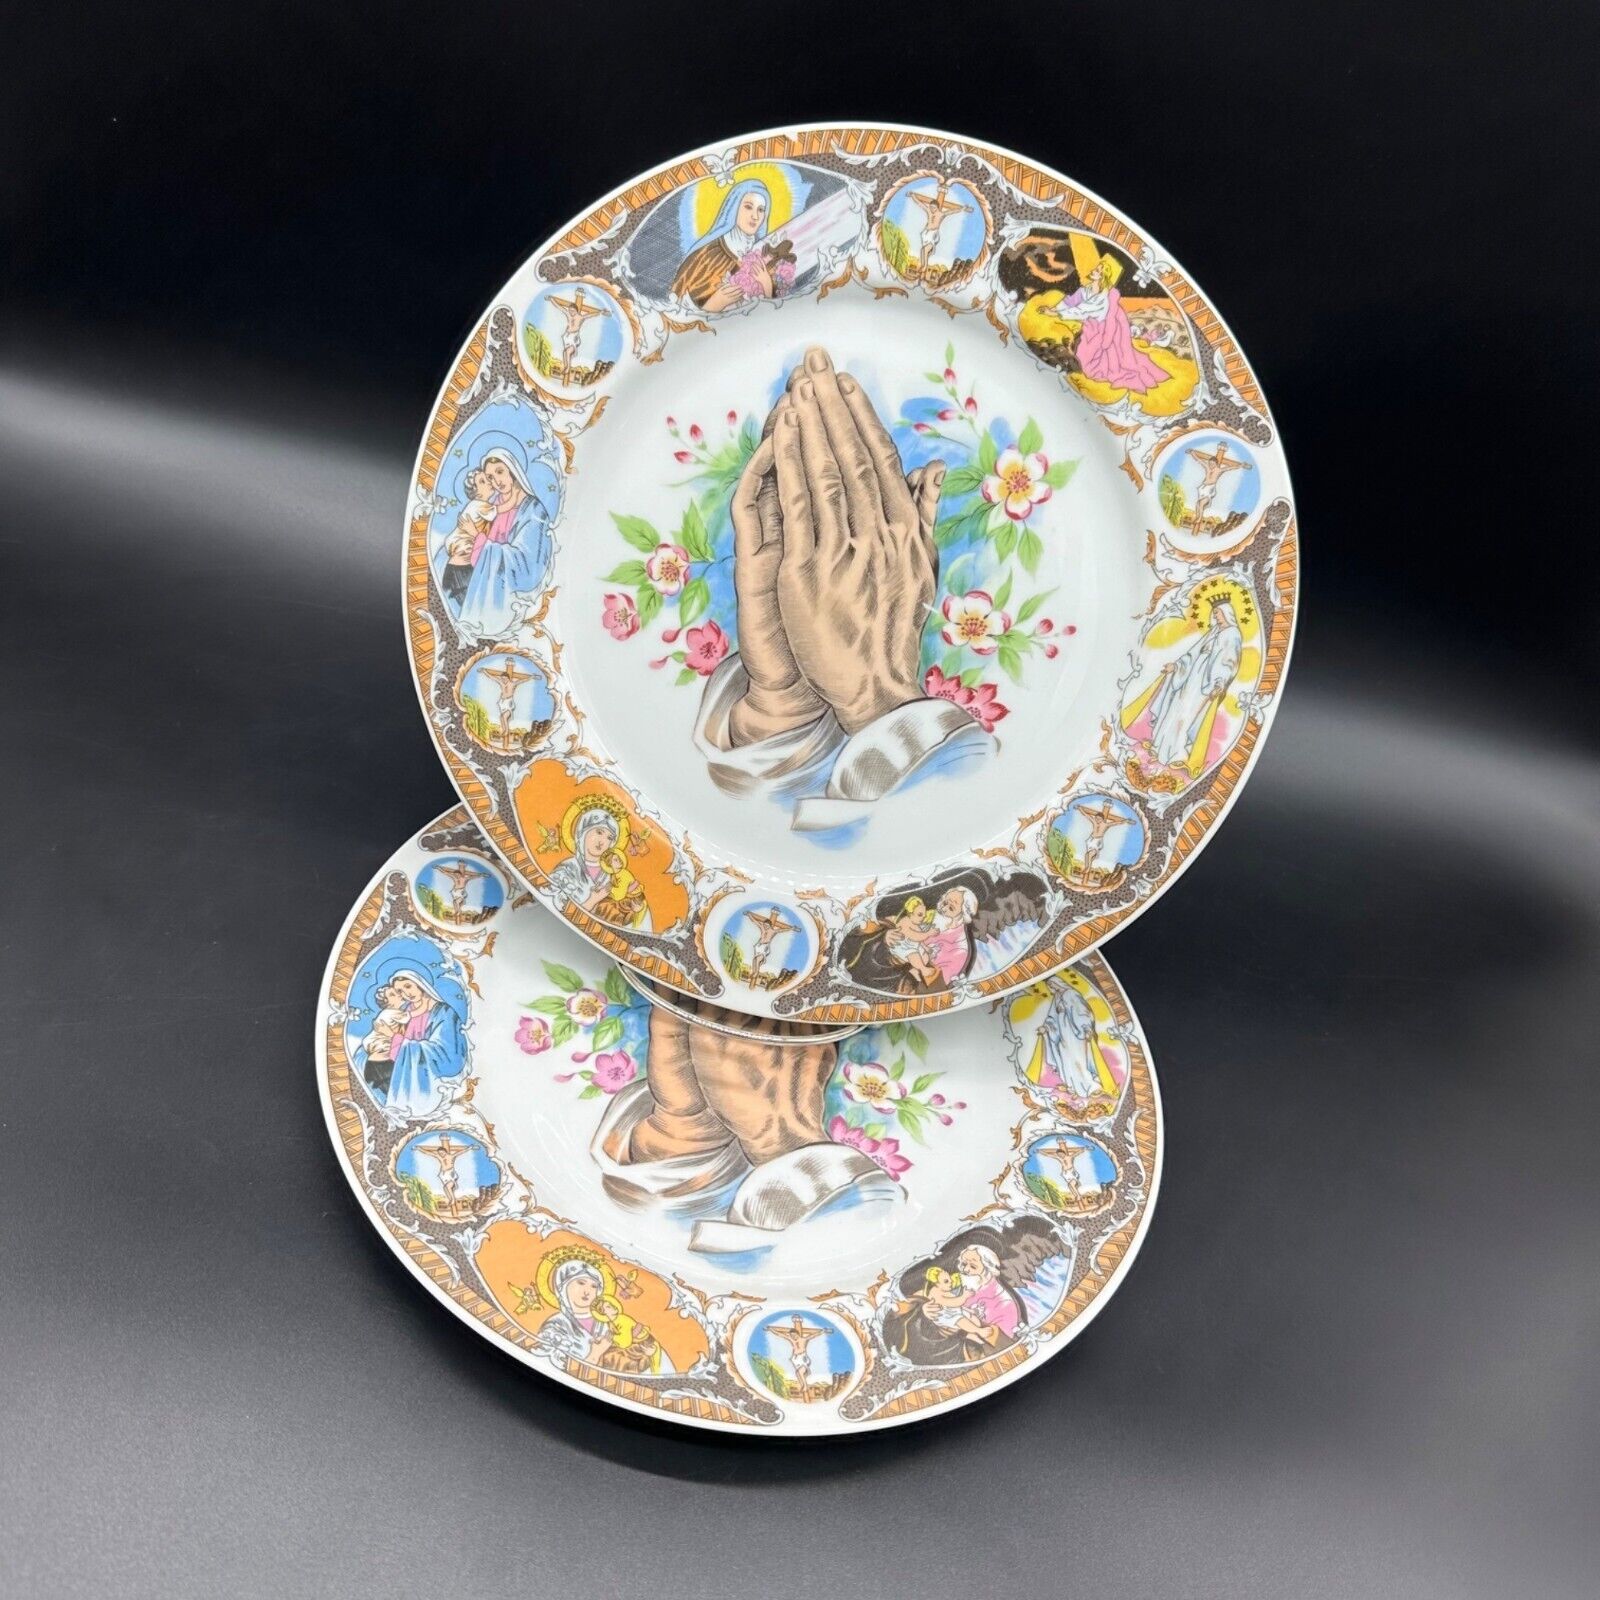 Vintage Praying Hands Plates Japan Religious Easter Dinner Resurrection Jesus